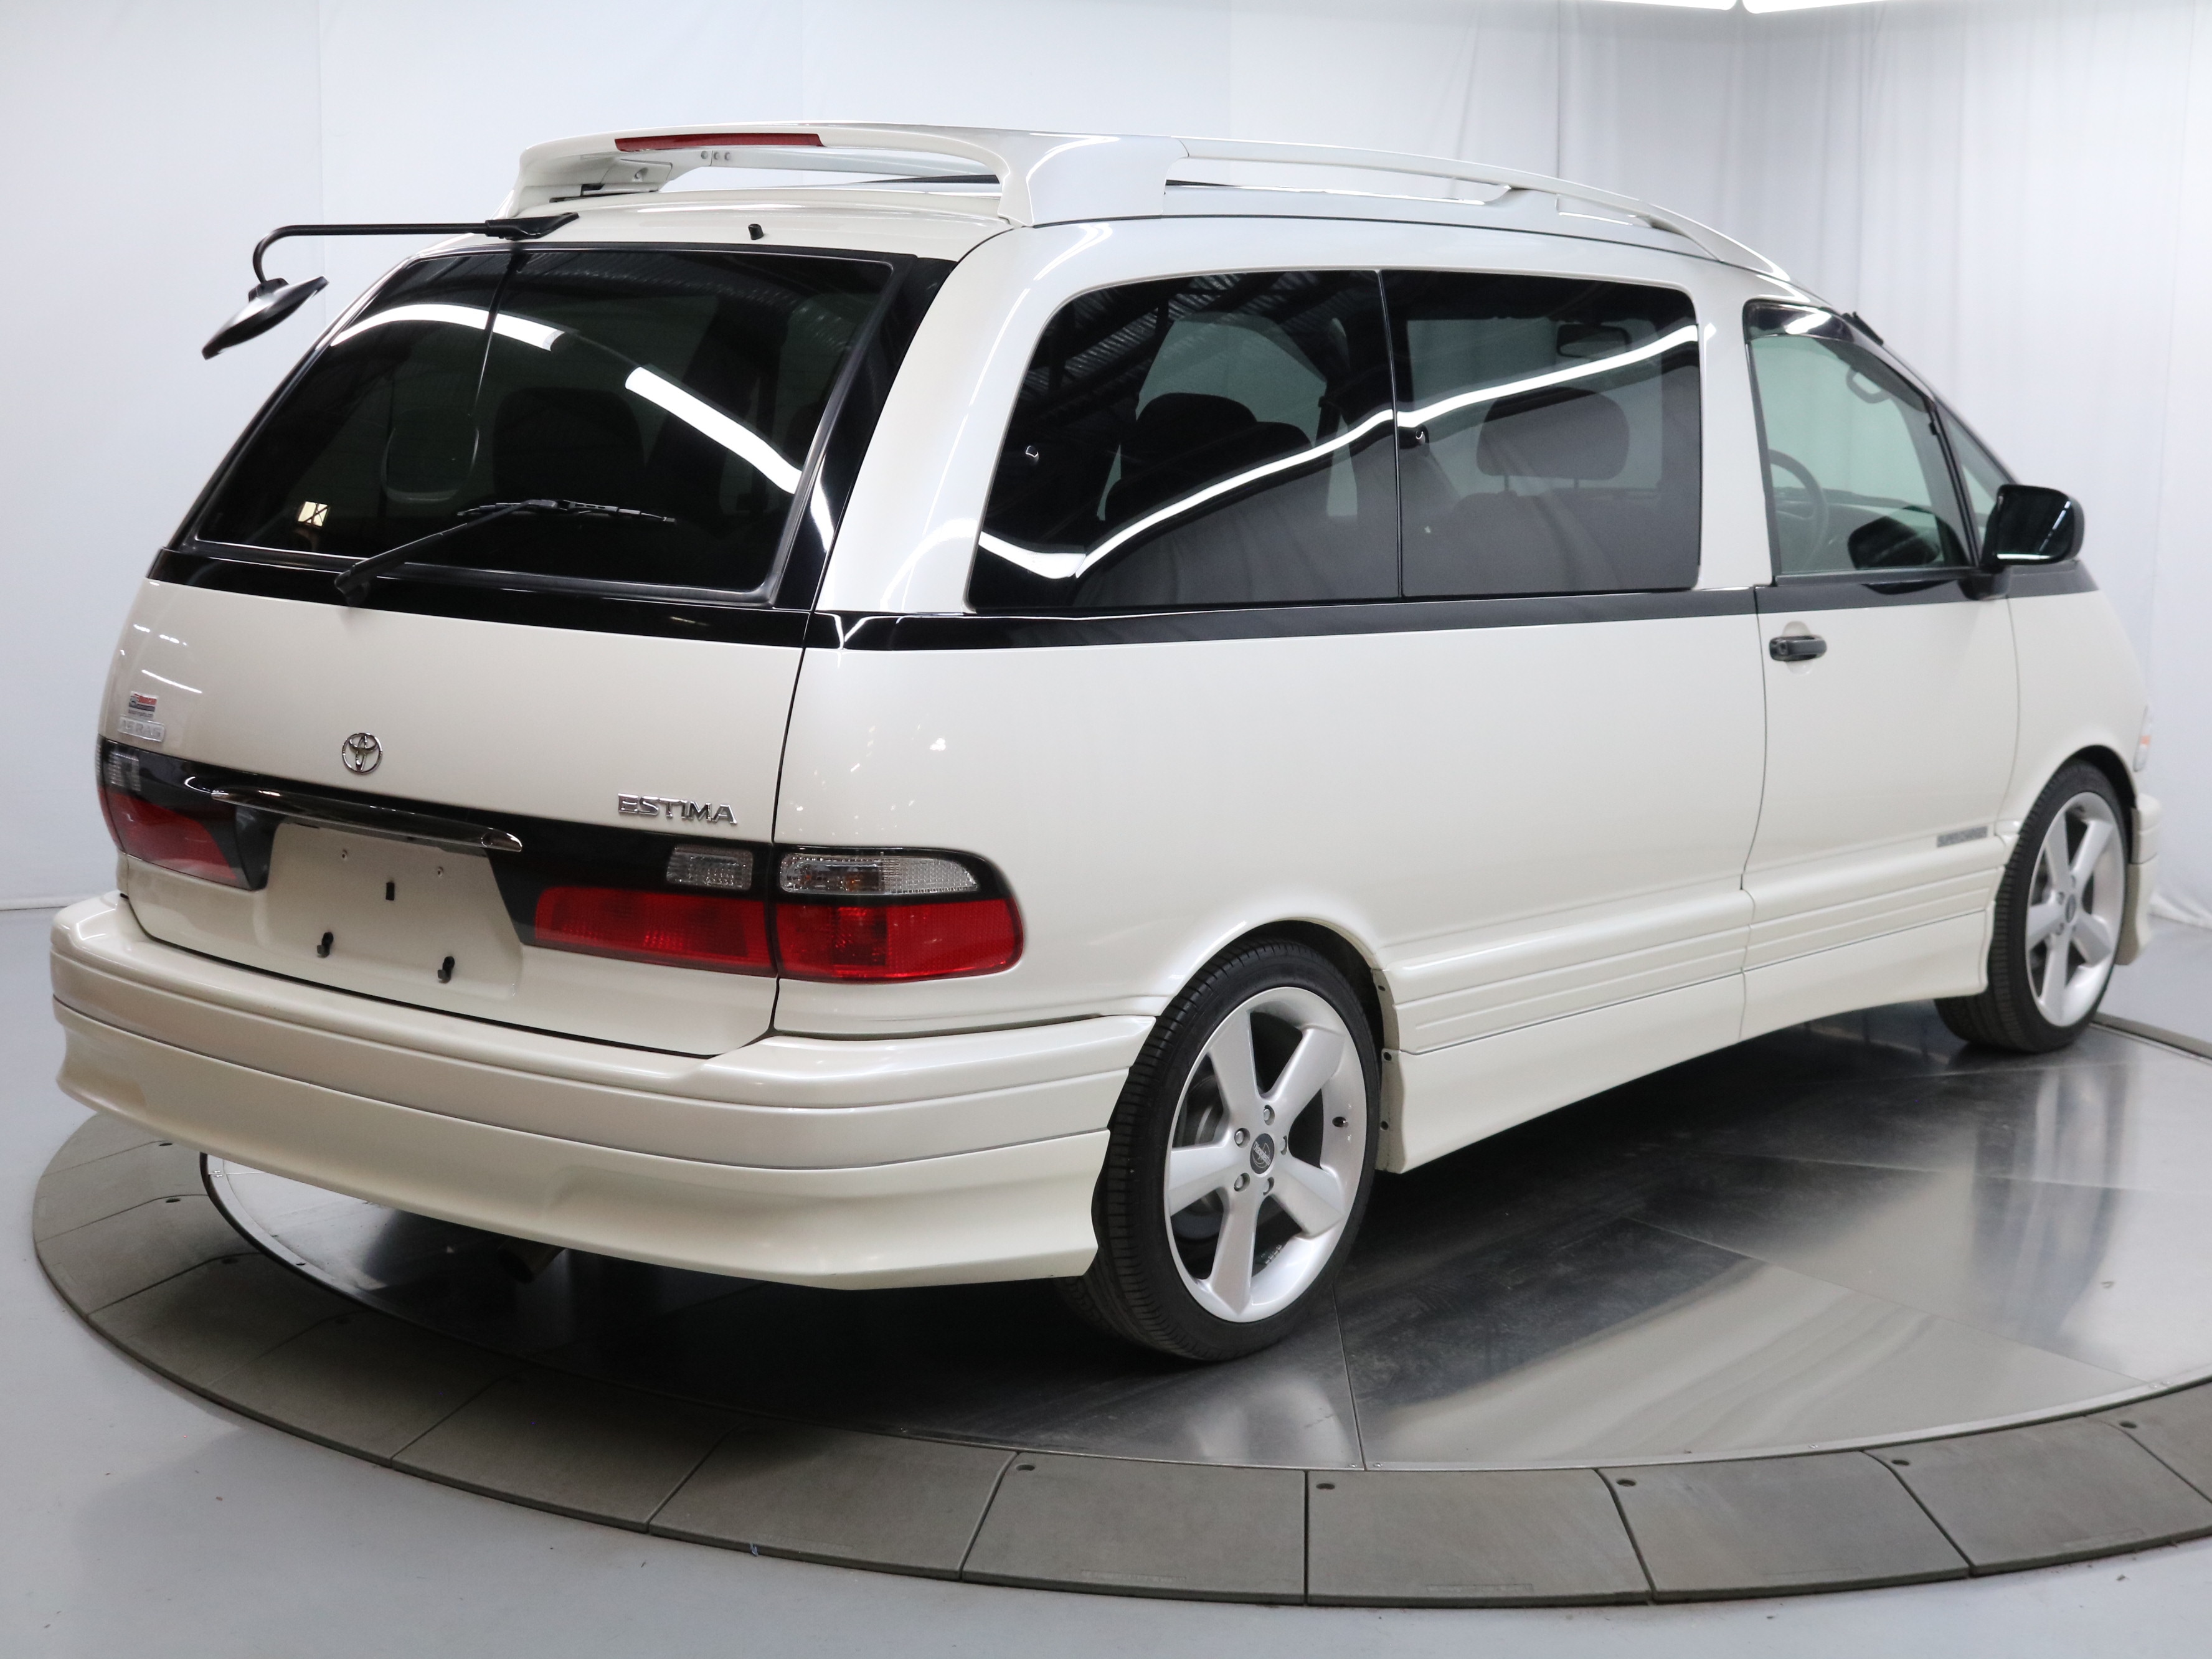 1998 Toyota Estima 7